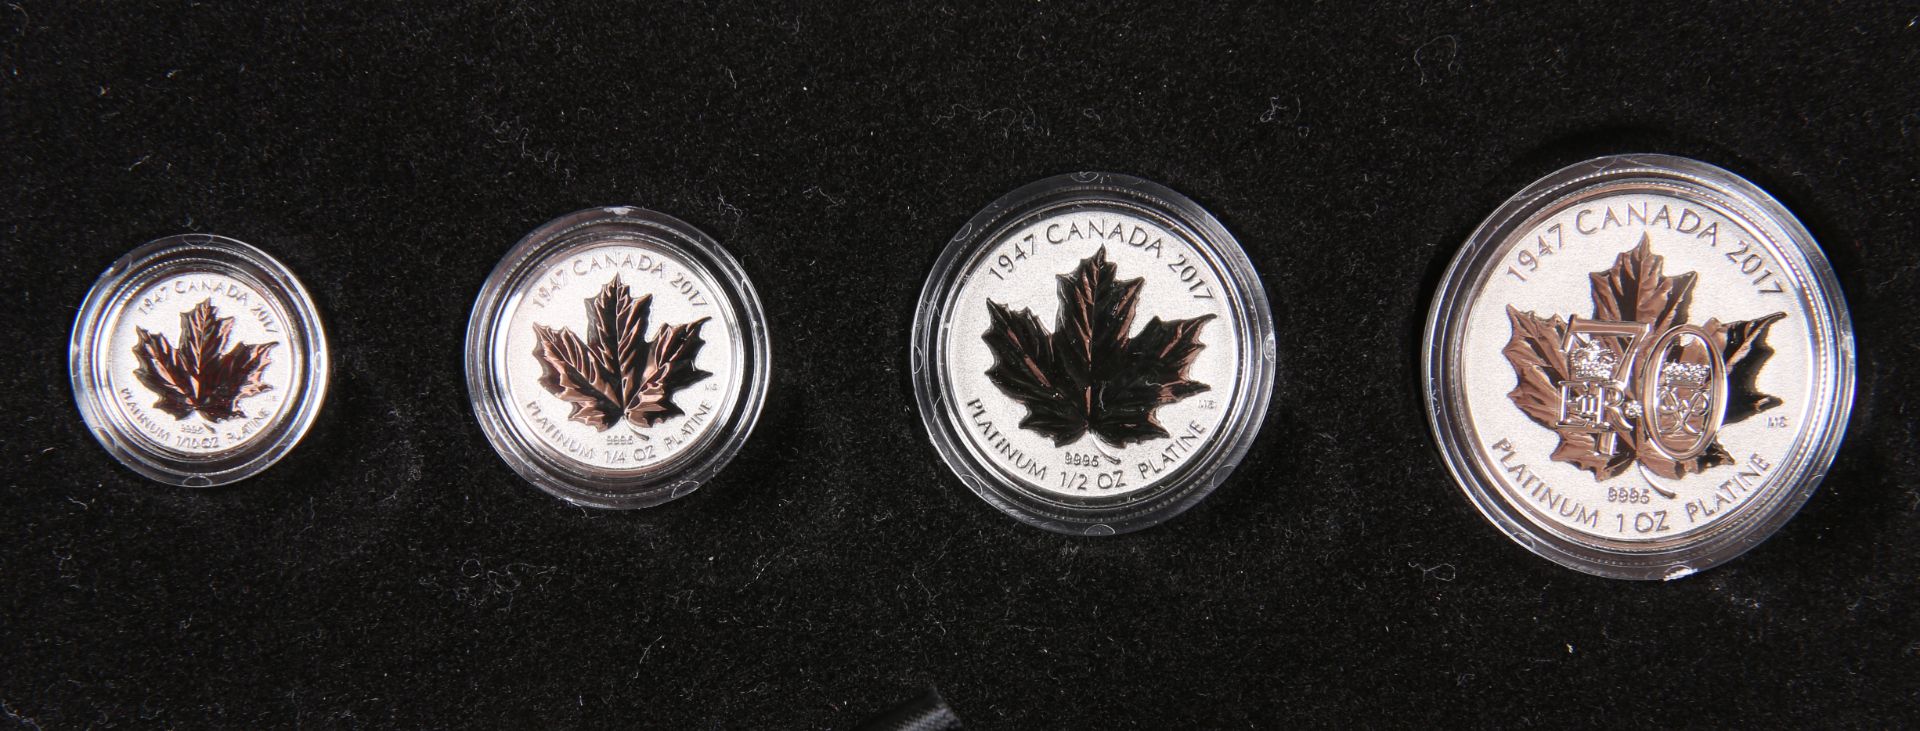 A ROYAL CANADIAN MINT PLATINUM ANNIVERSARY PRESTIGE COIN SET, comprising four platinum coins: 300